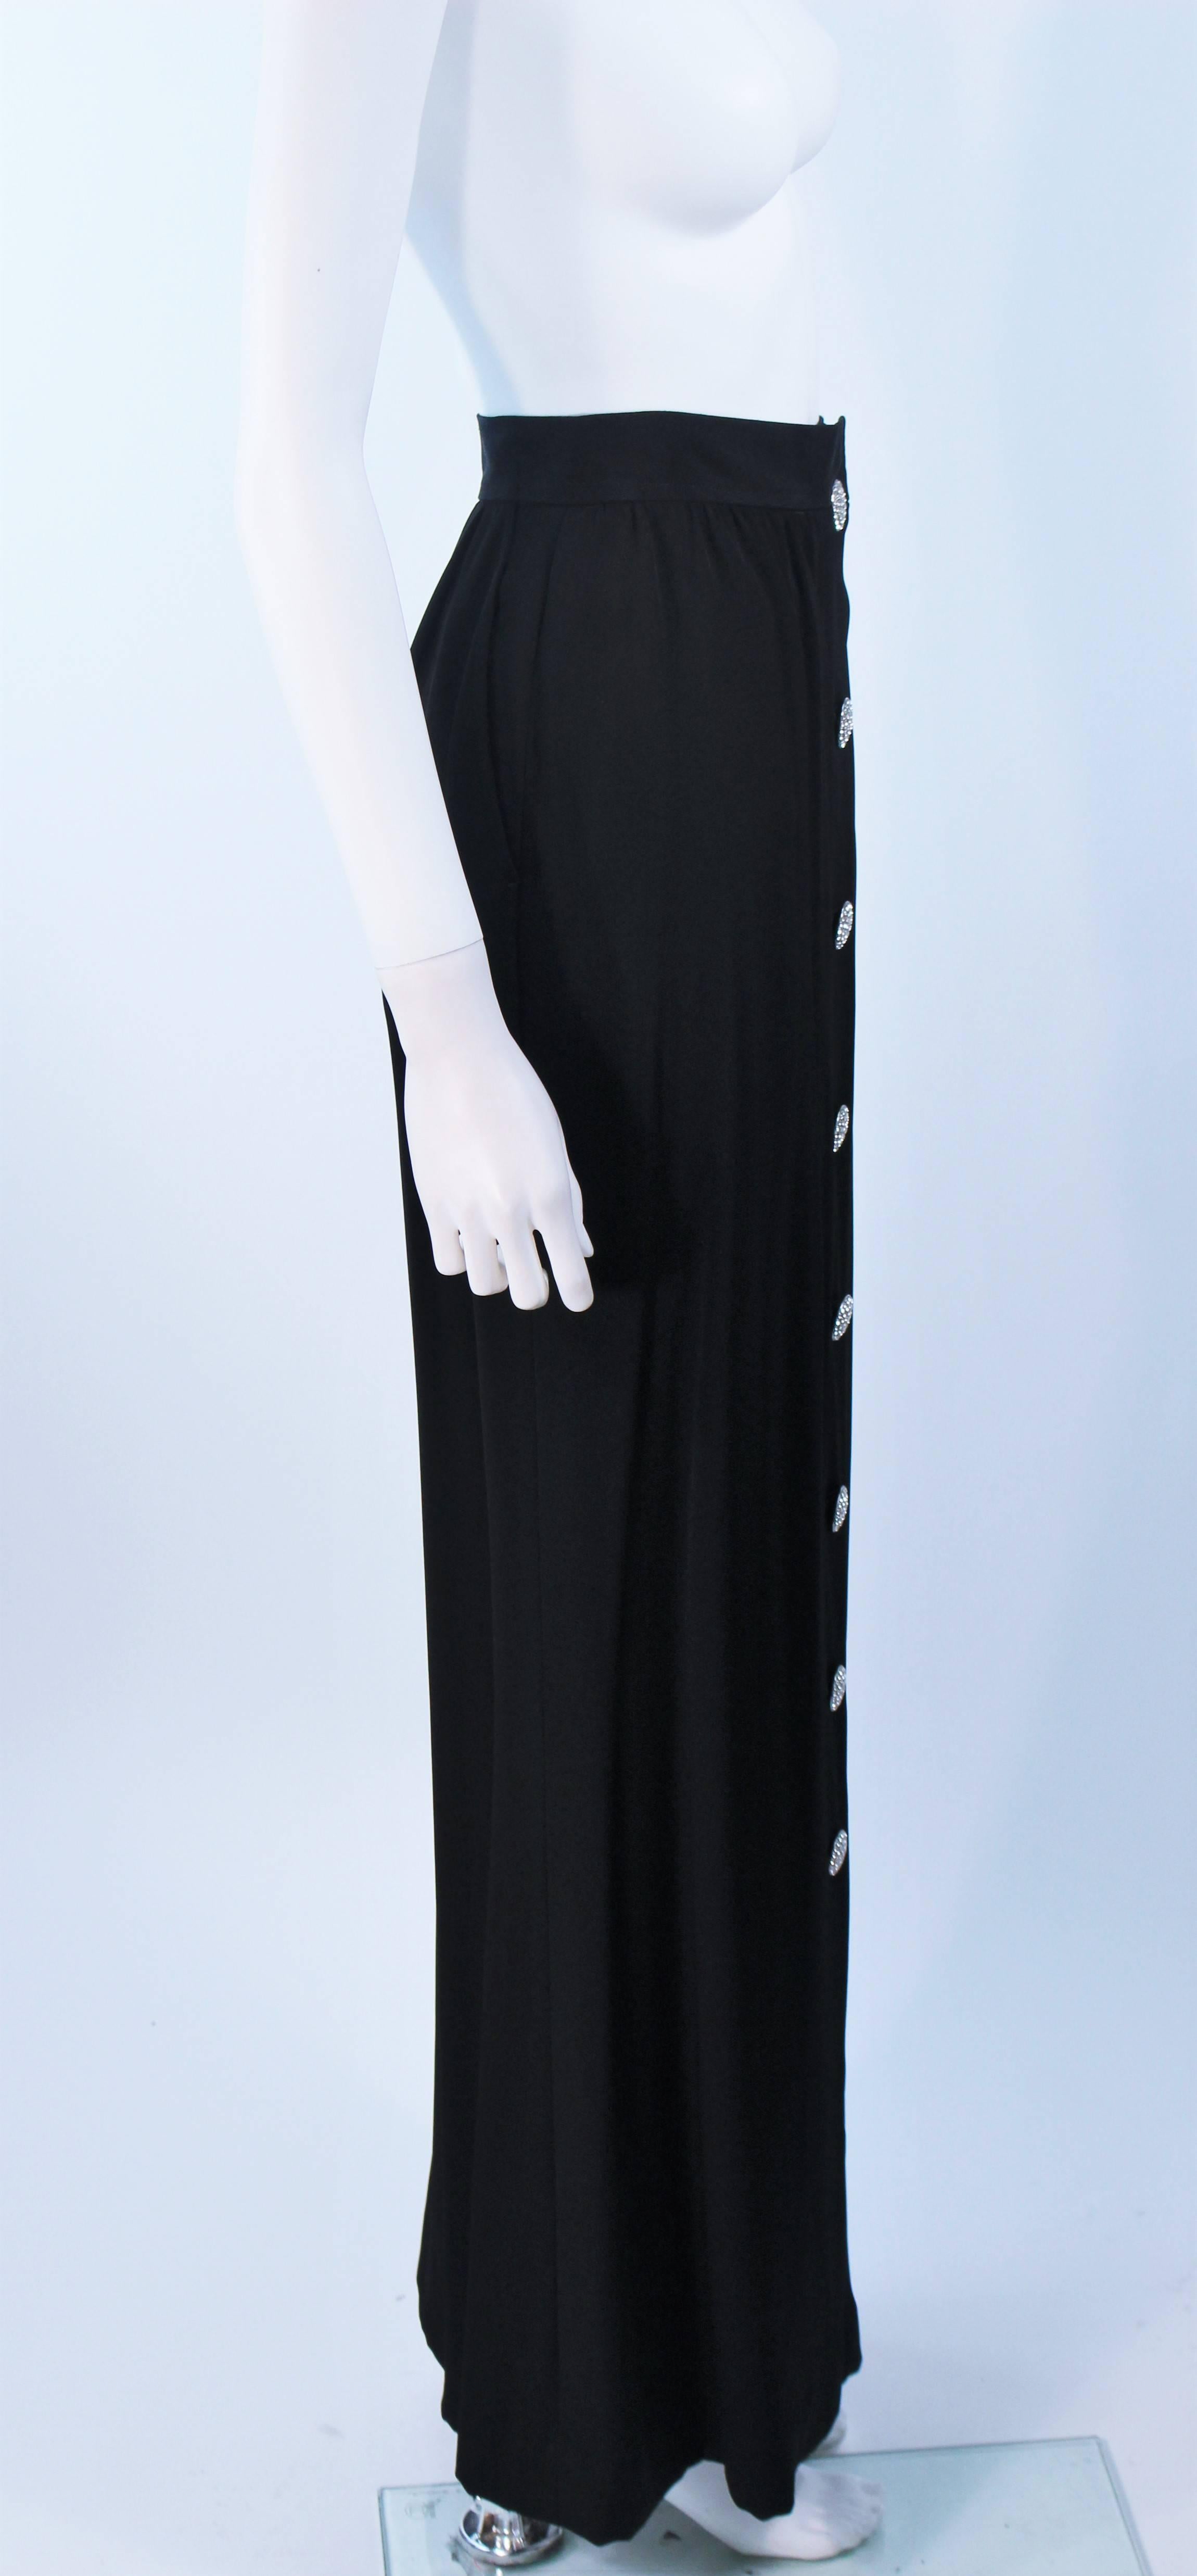 Women's YVES SAINT LAURENT Black Full Length Skirt with Rhinestone Buttons Size 44 For Sale